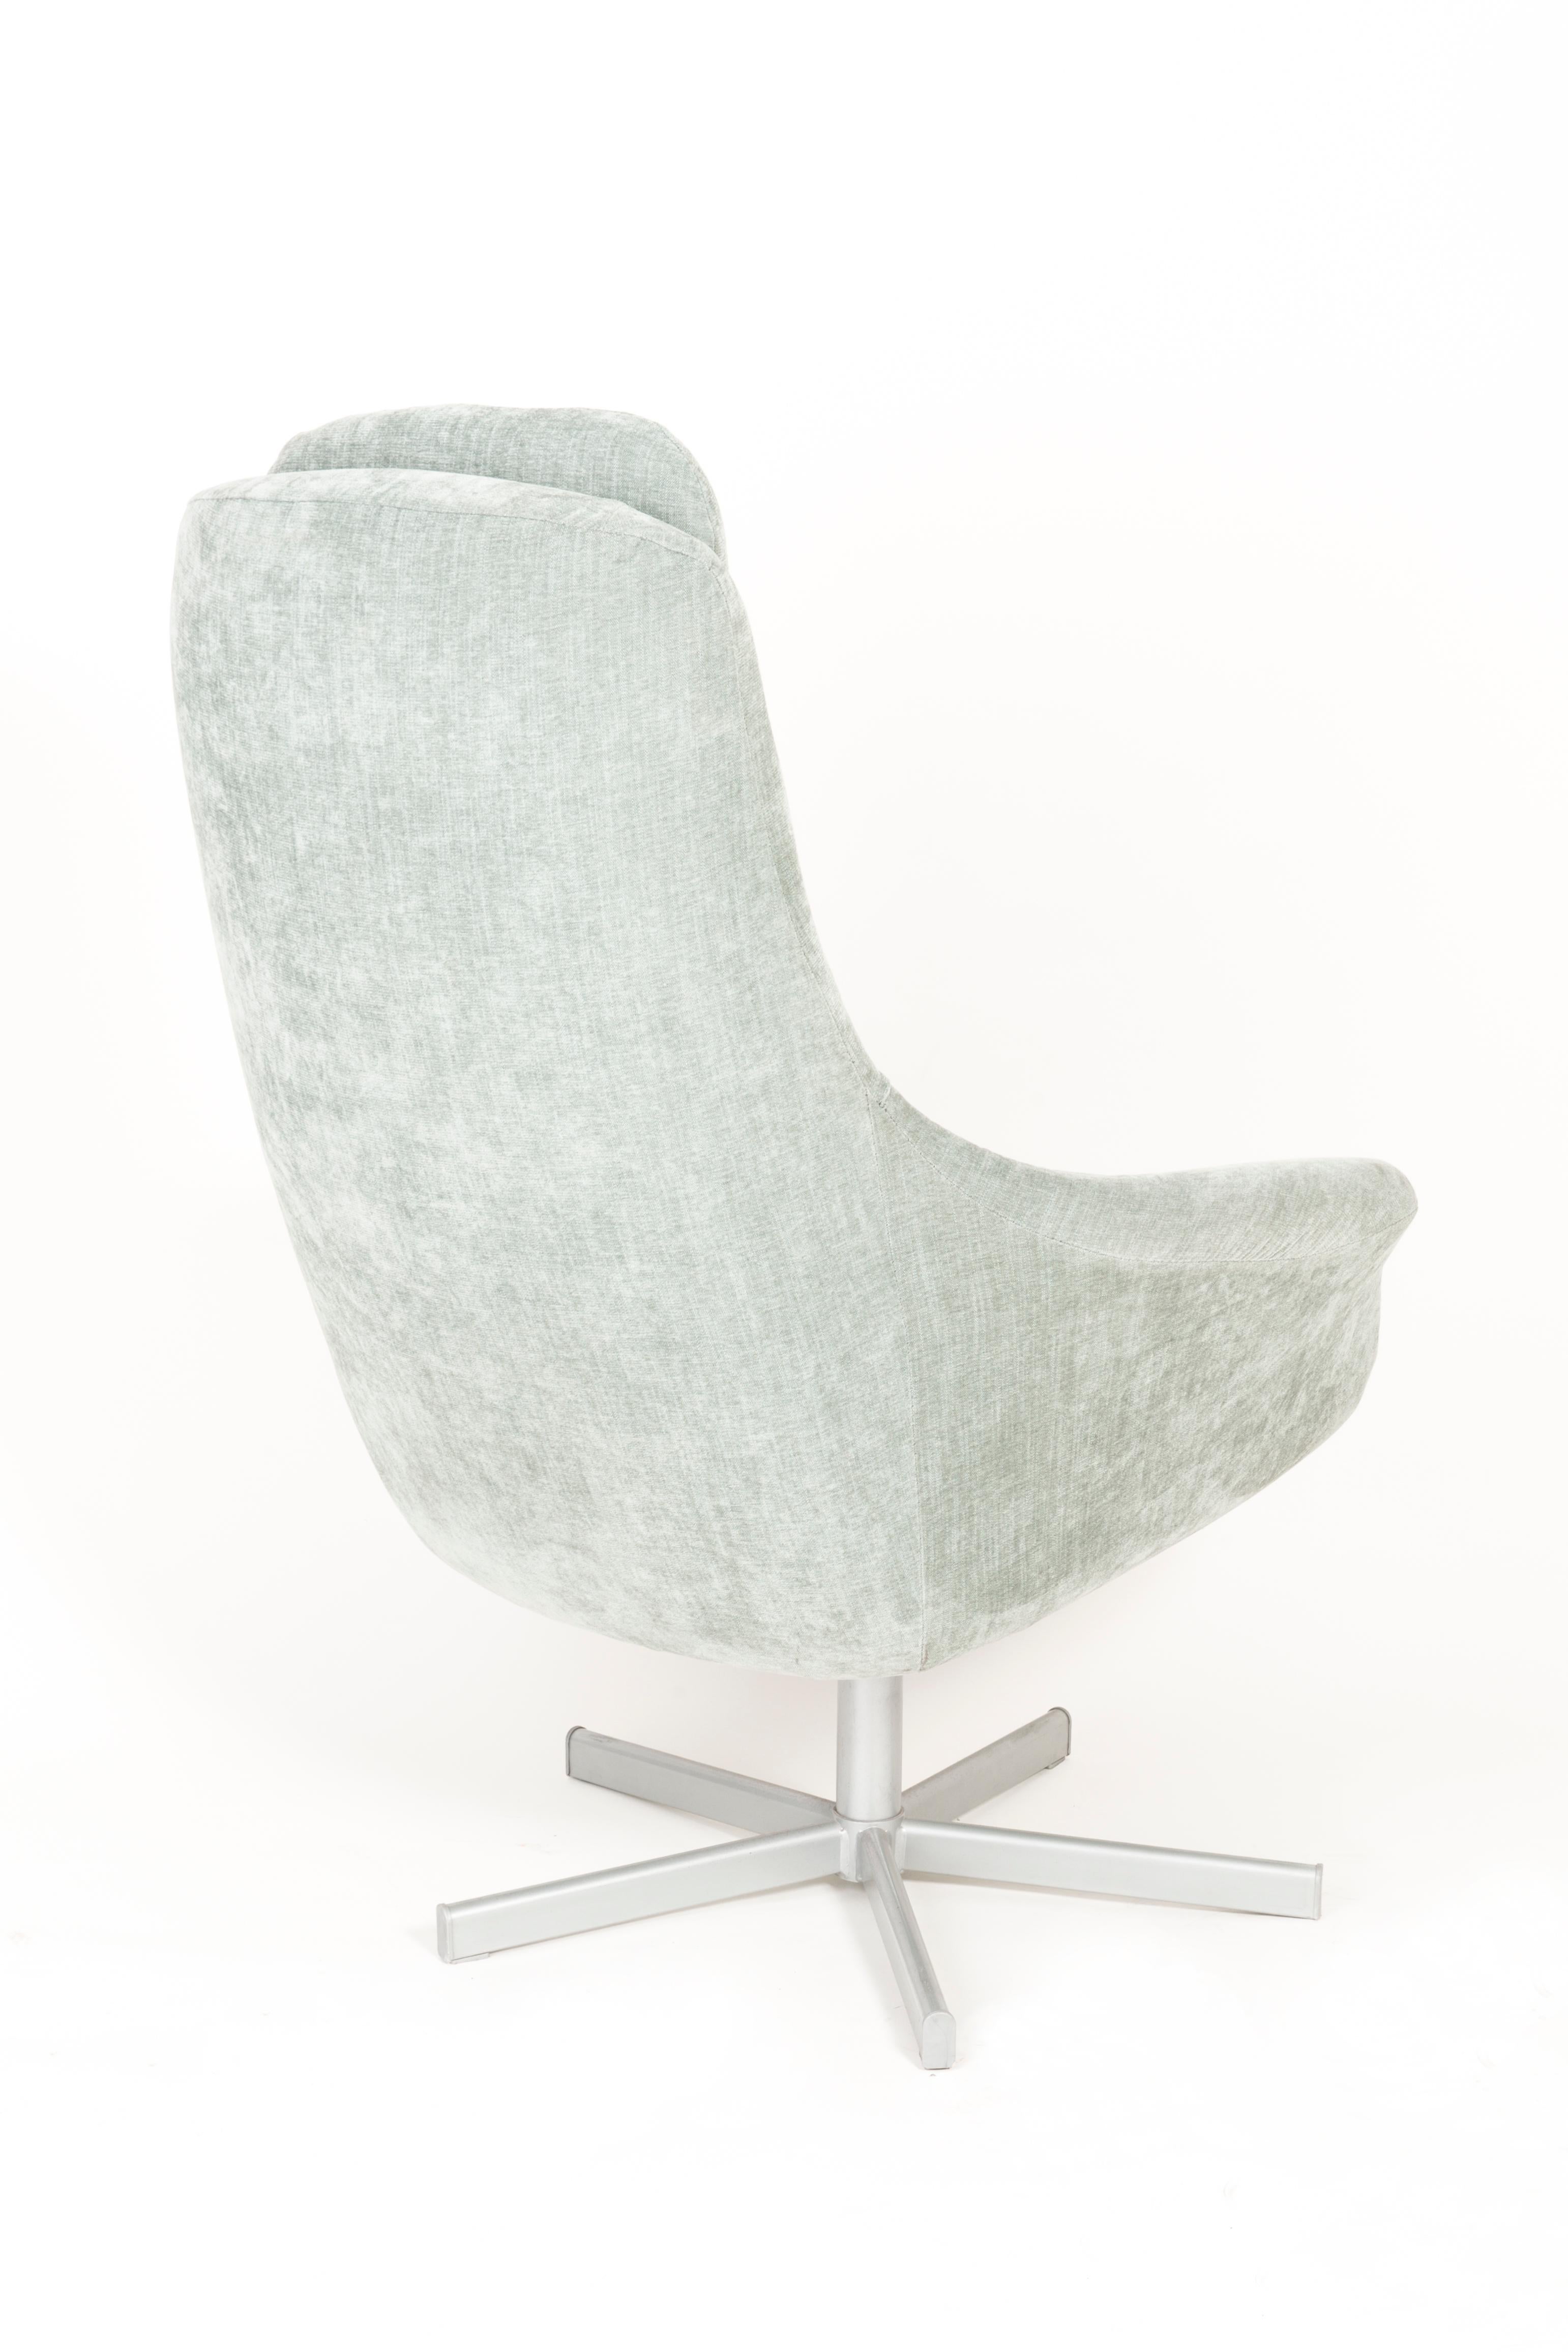 Hellgrüner drehbarer Sessel des 20. Jahrhunderts, 1960er Jahre (Metall) im Angebot